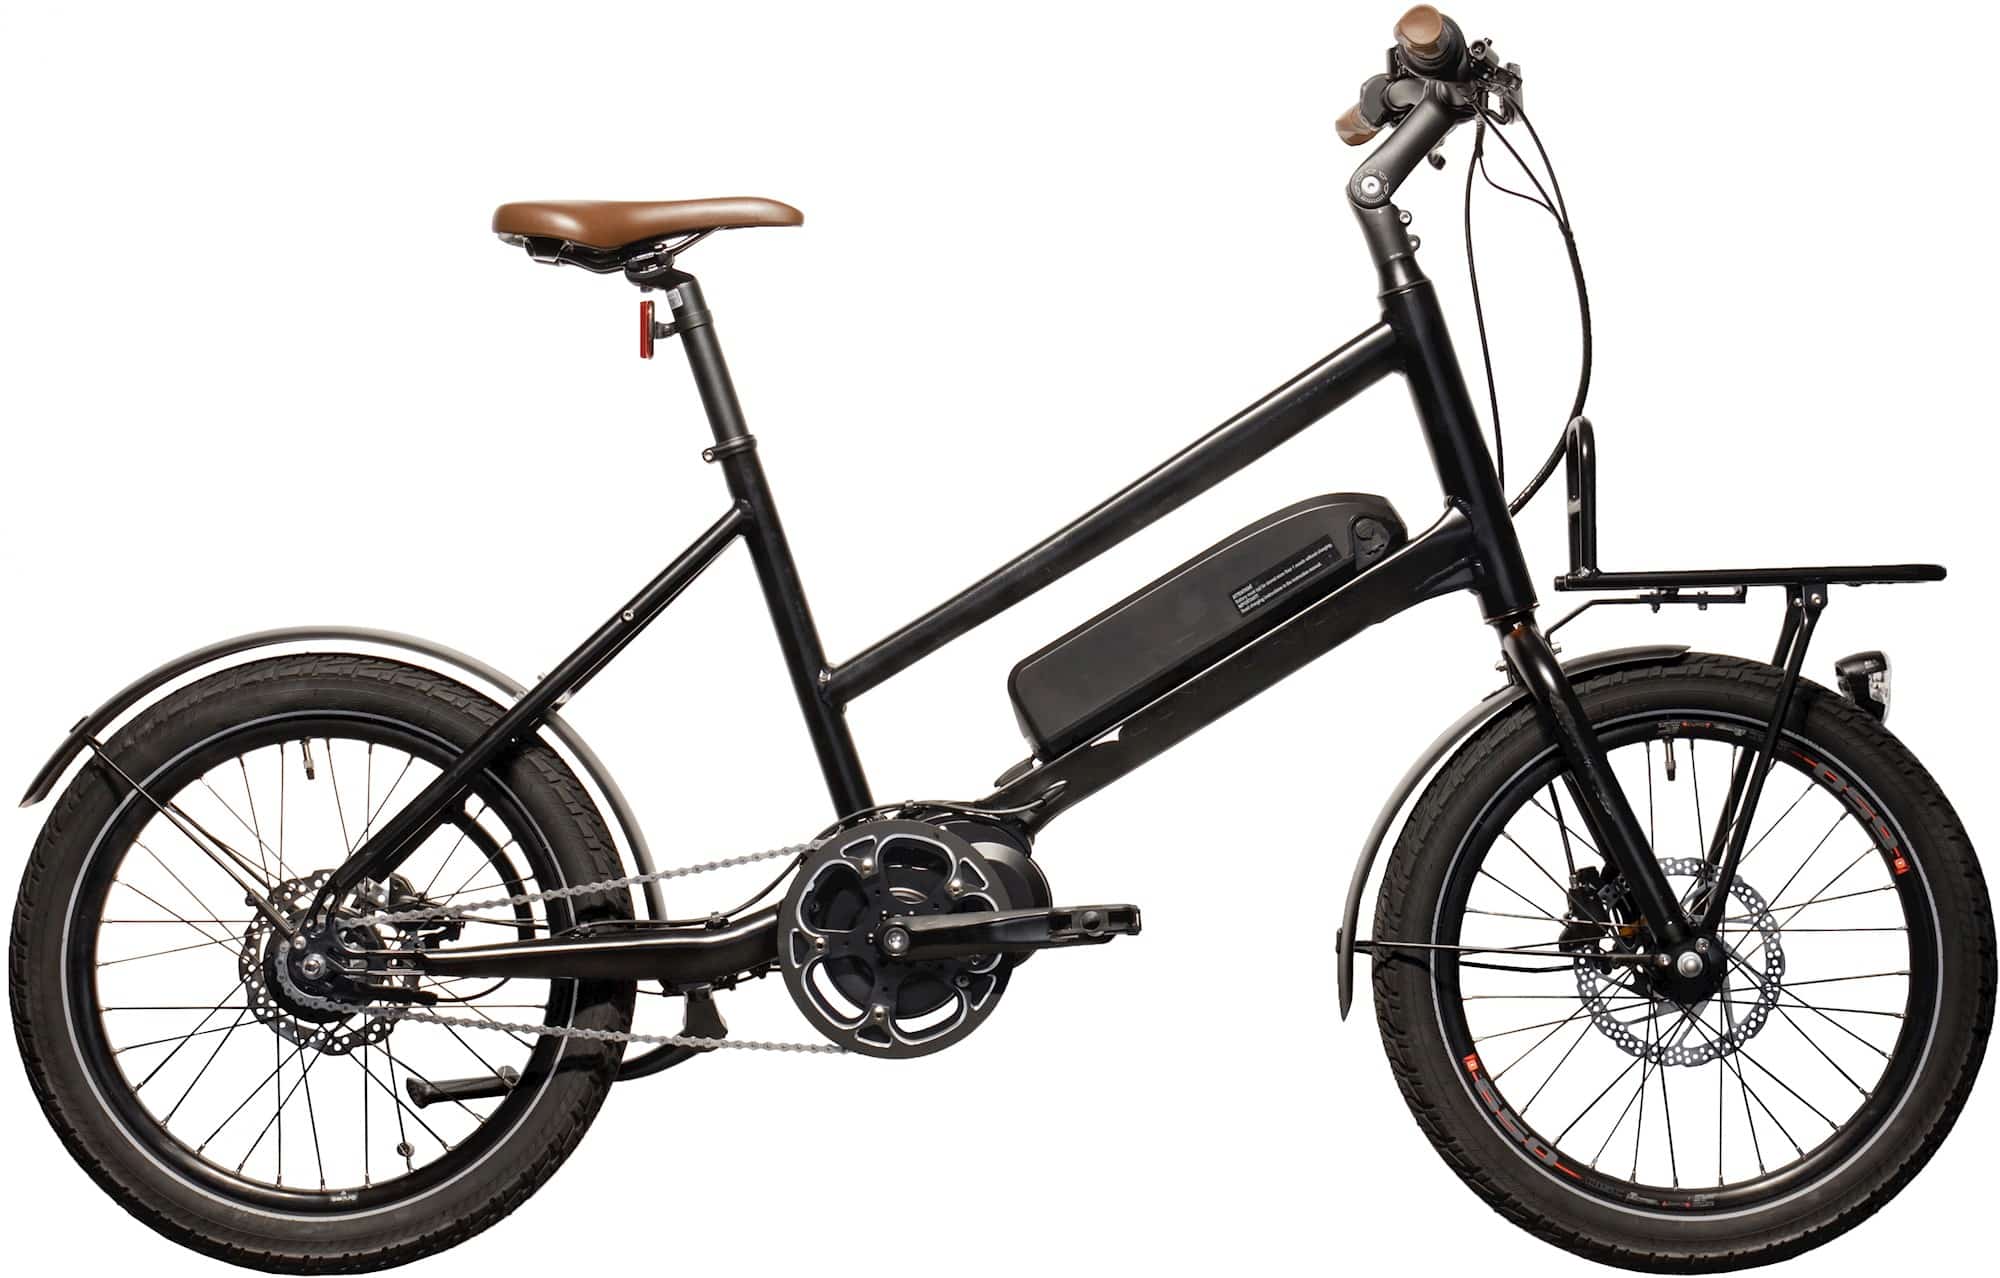 Roadie er en helt ny cargo-cykel, der passer perfekt til storbyen med sit 